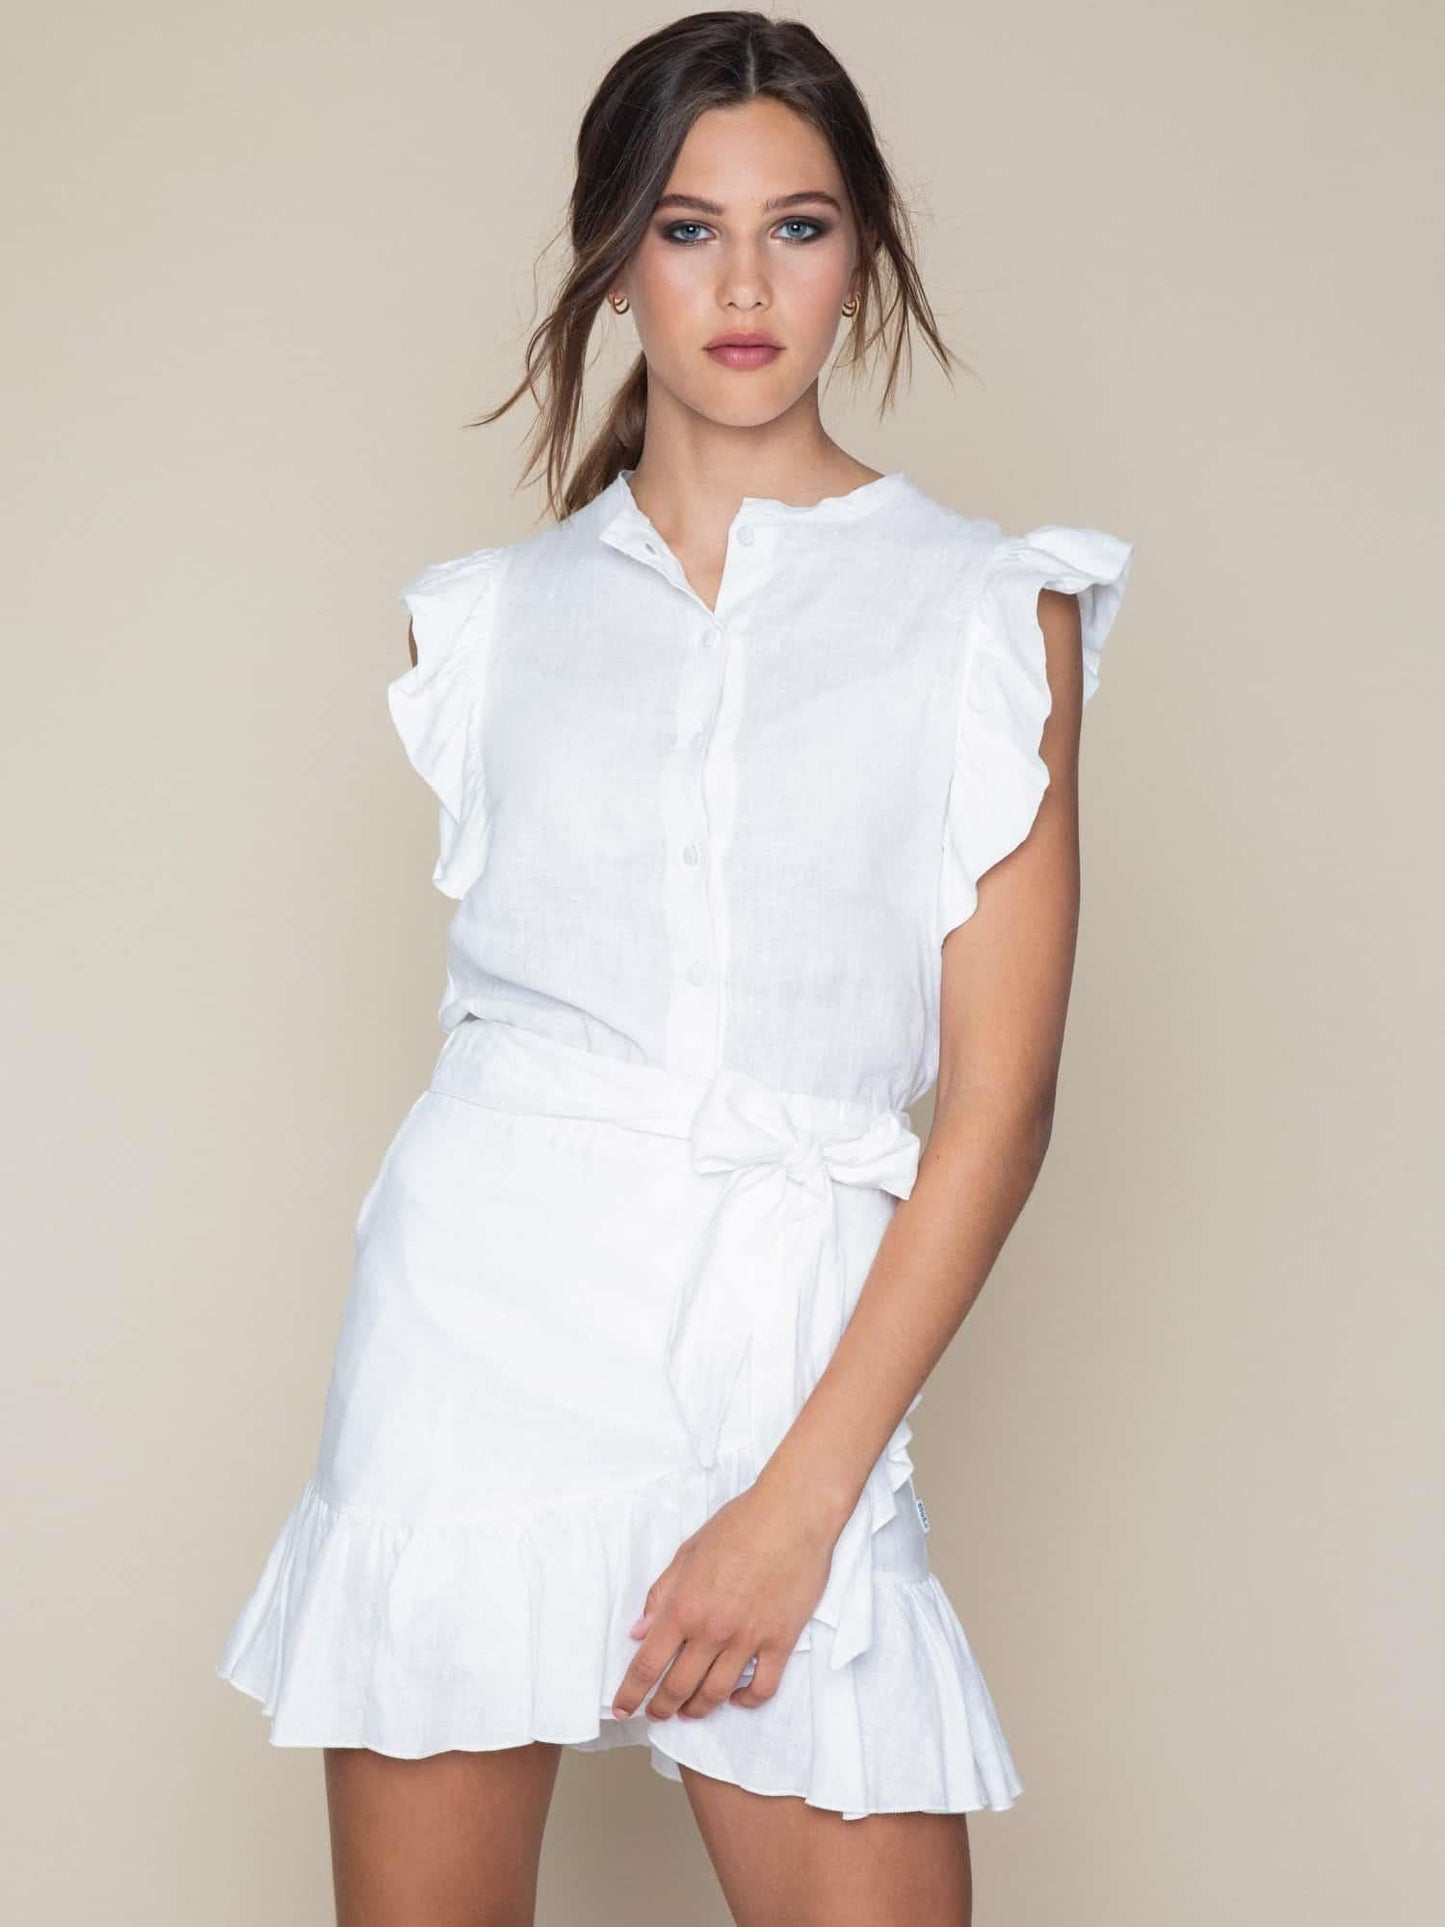 ella&il - Pauline Linen Shirt White - No22 Damplassen